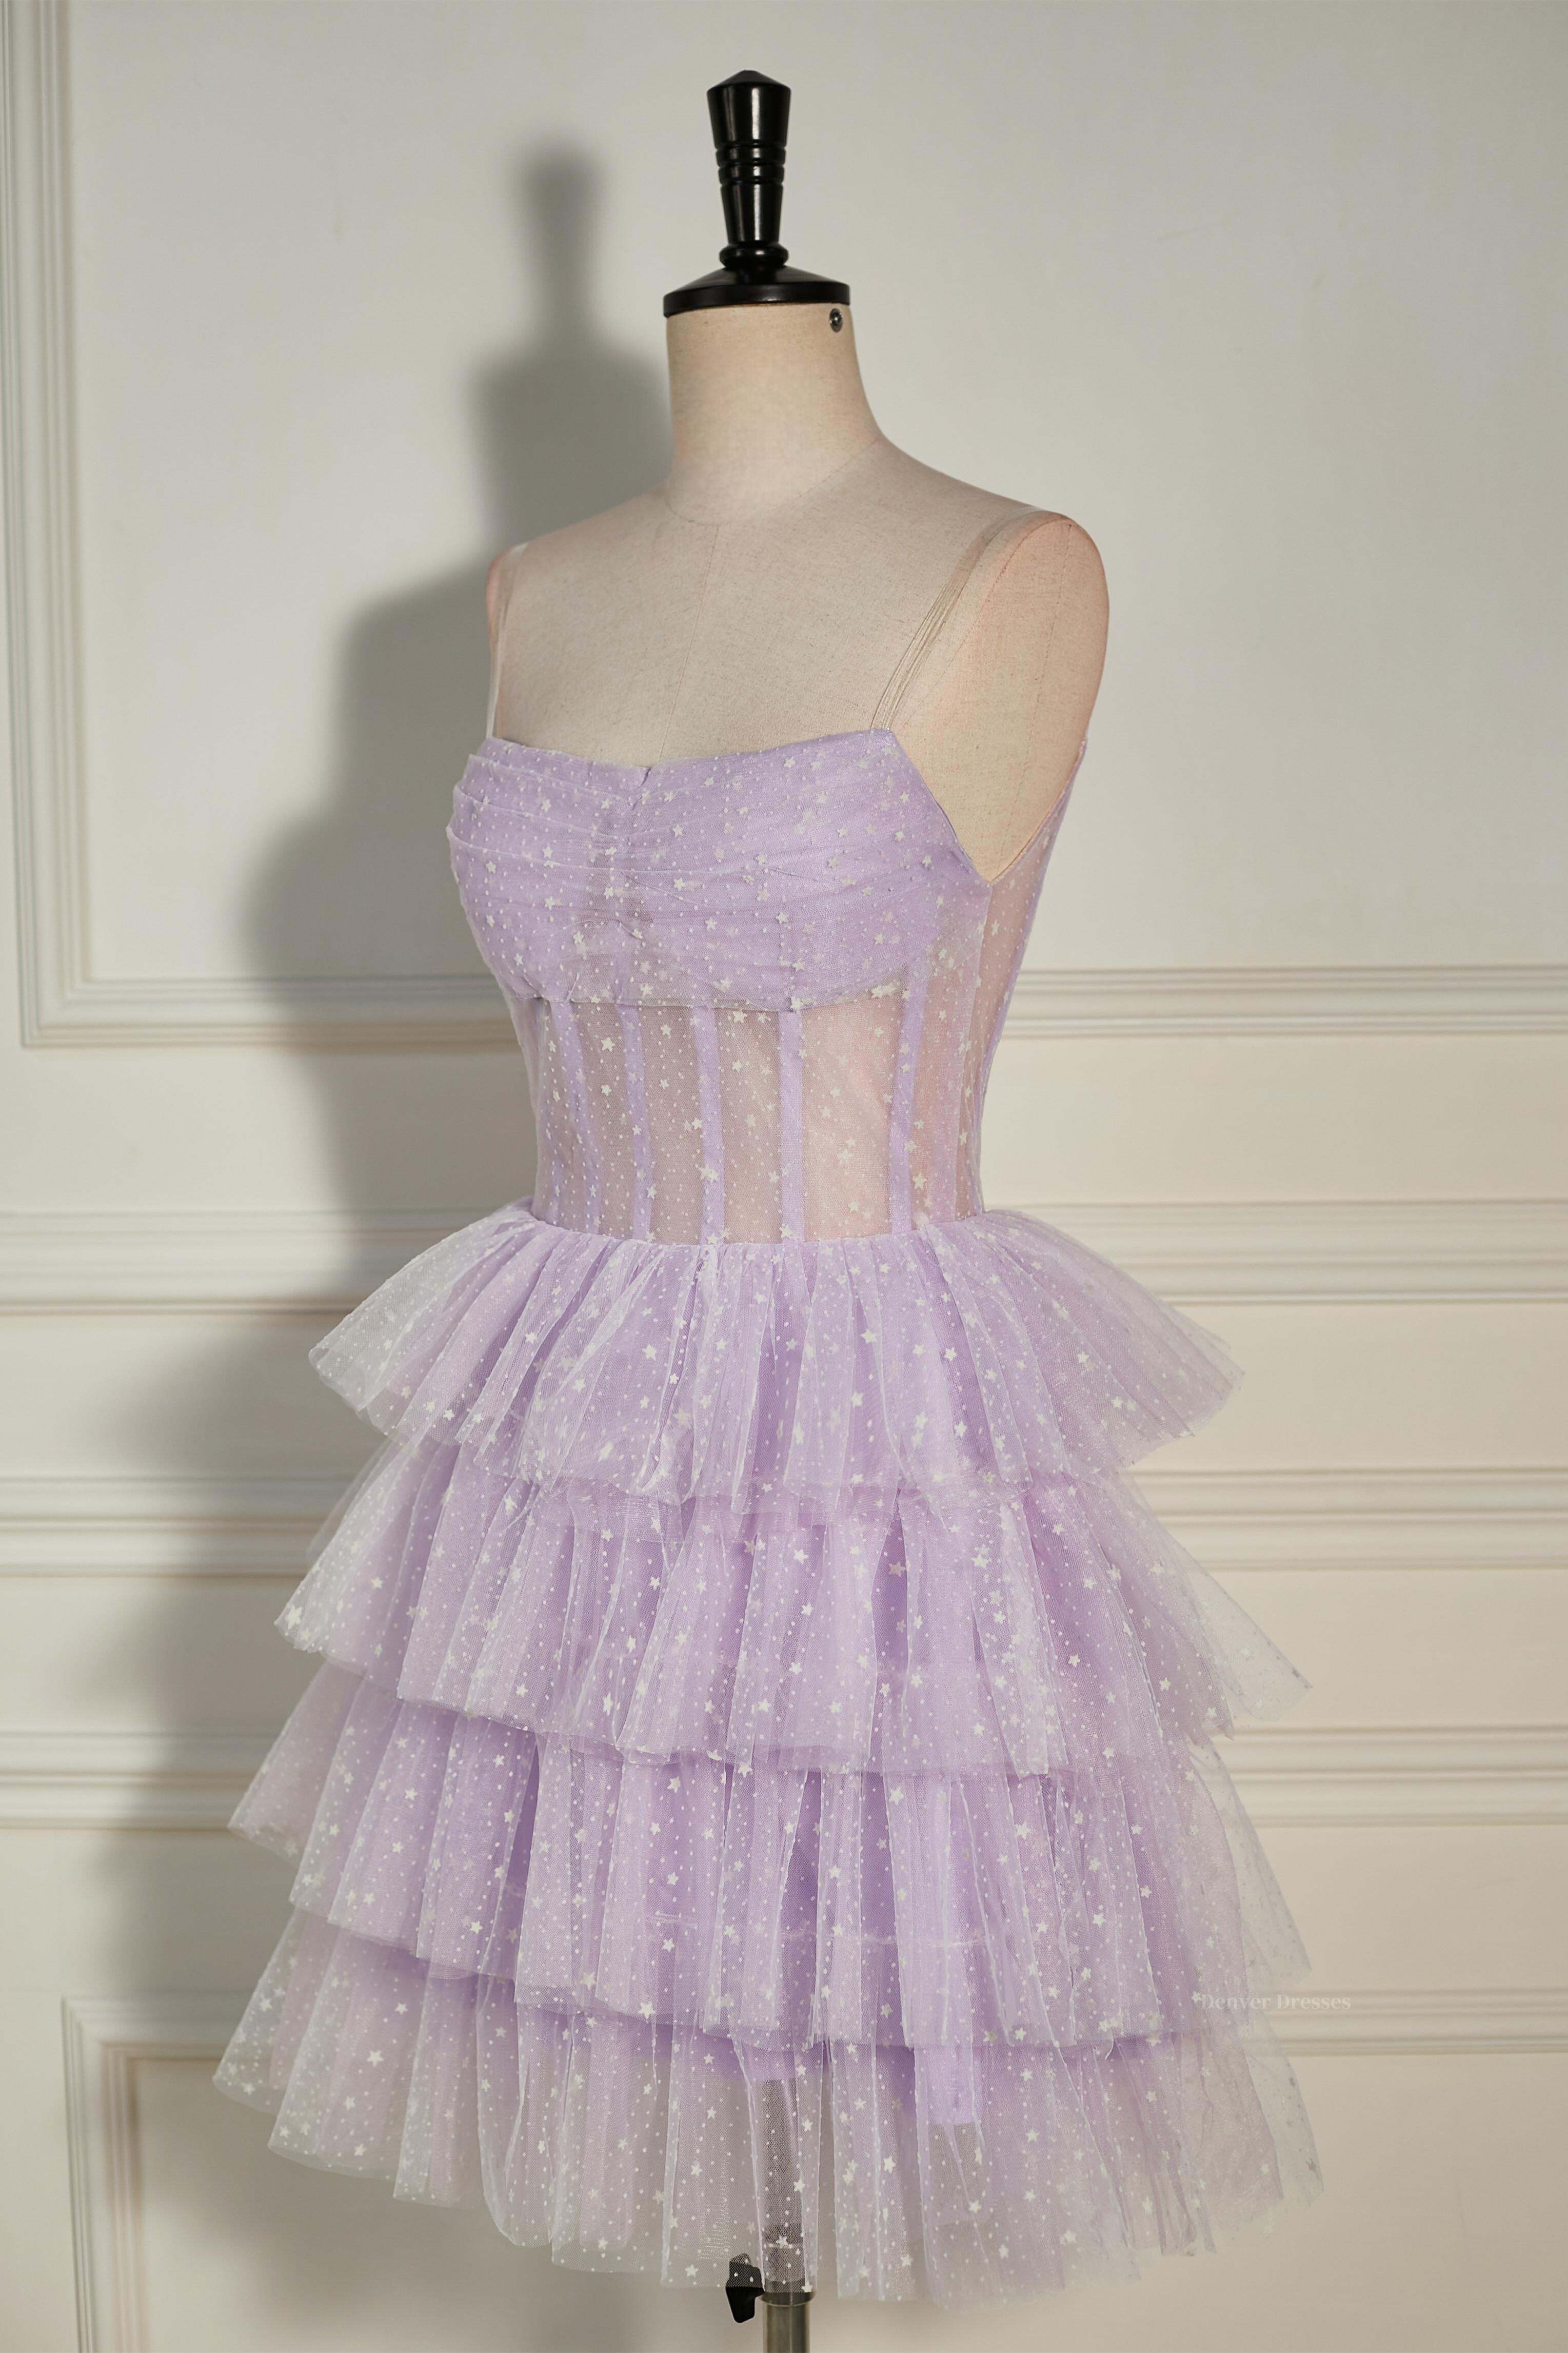 Shirt Dress, Lavender Strapless Dot Tulle Multi-Layers Homecoming Dress